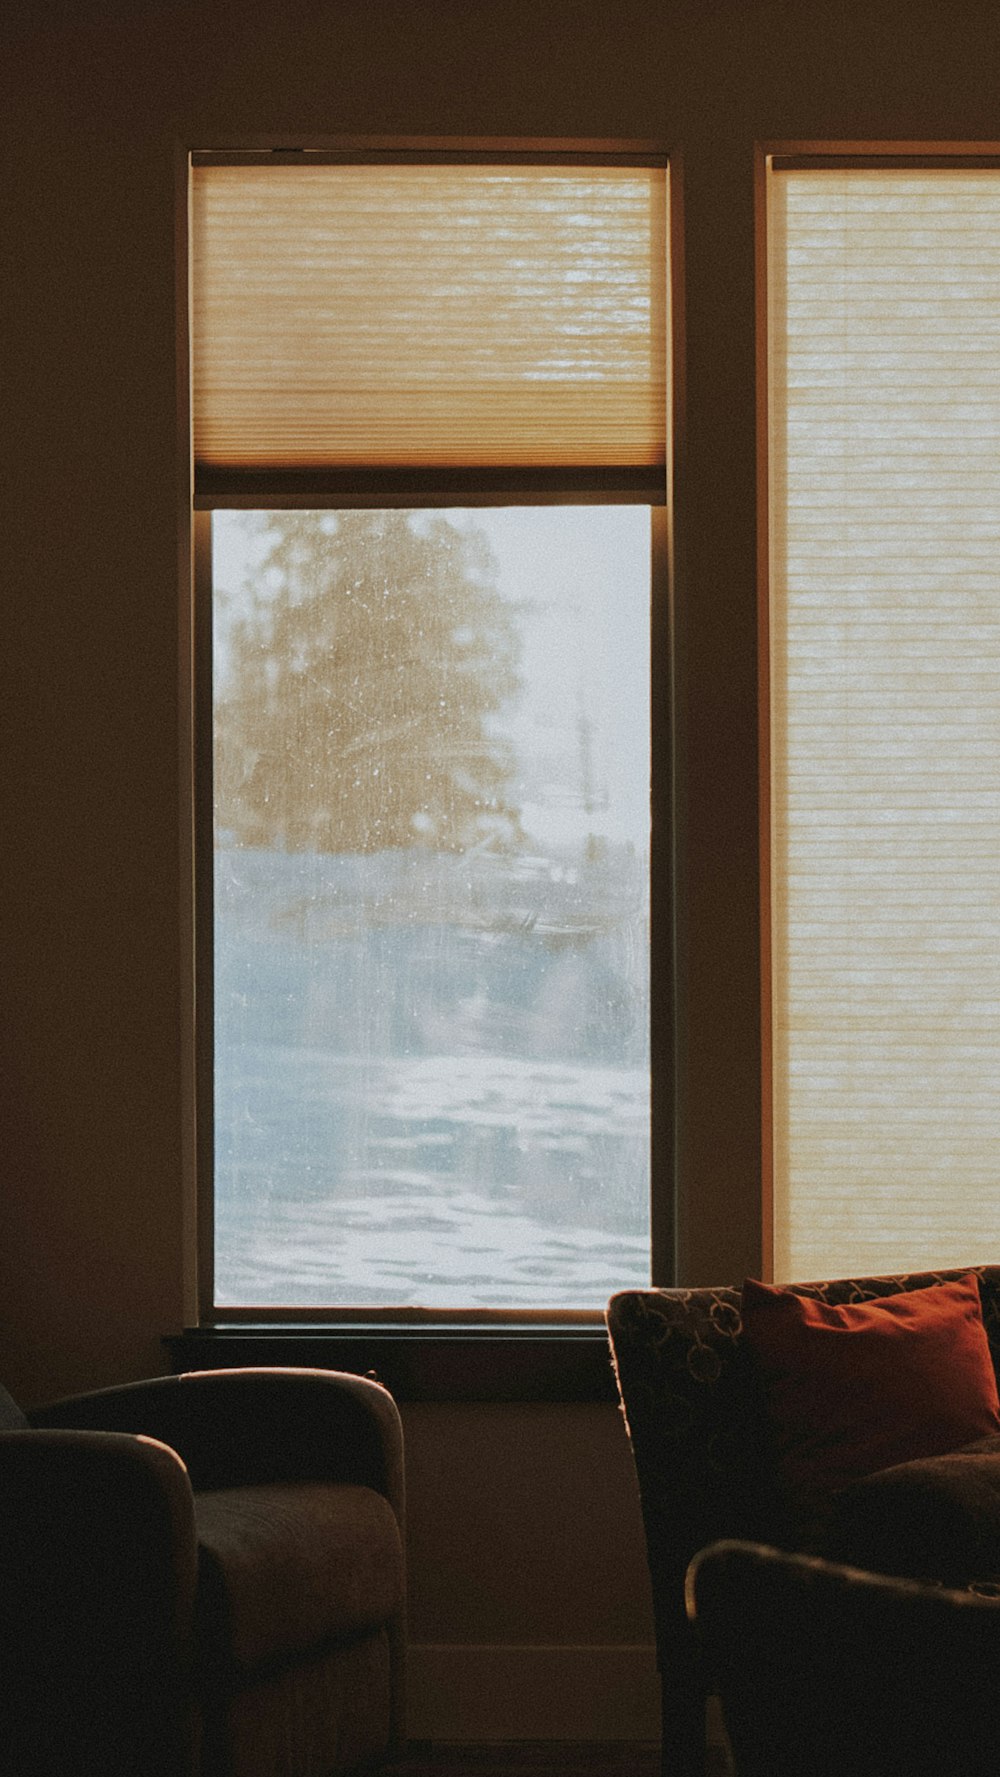 white window blinds